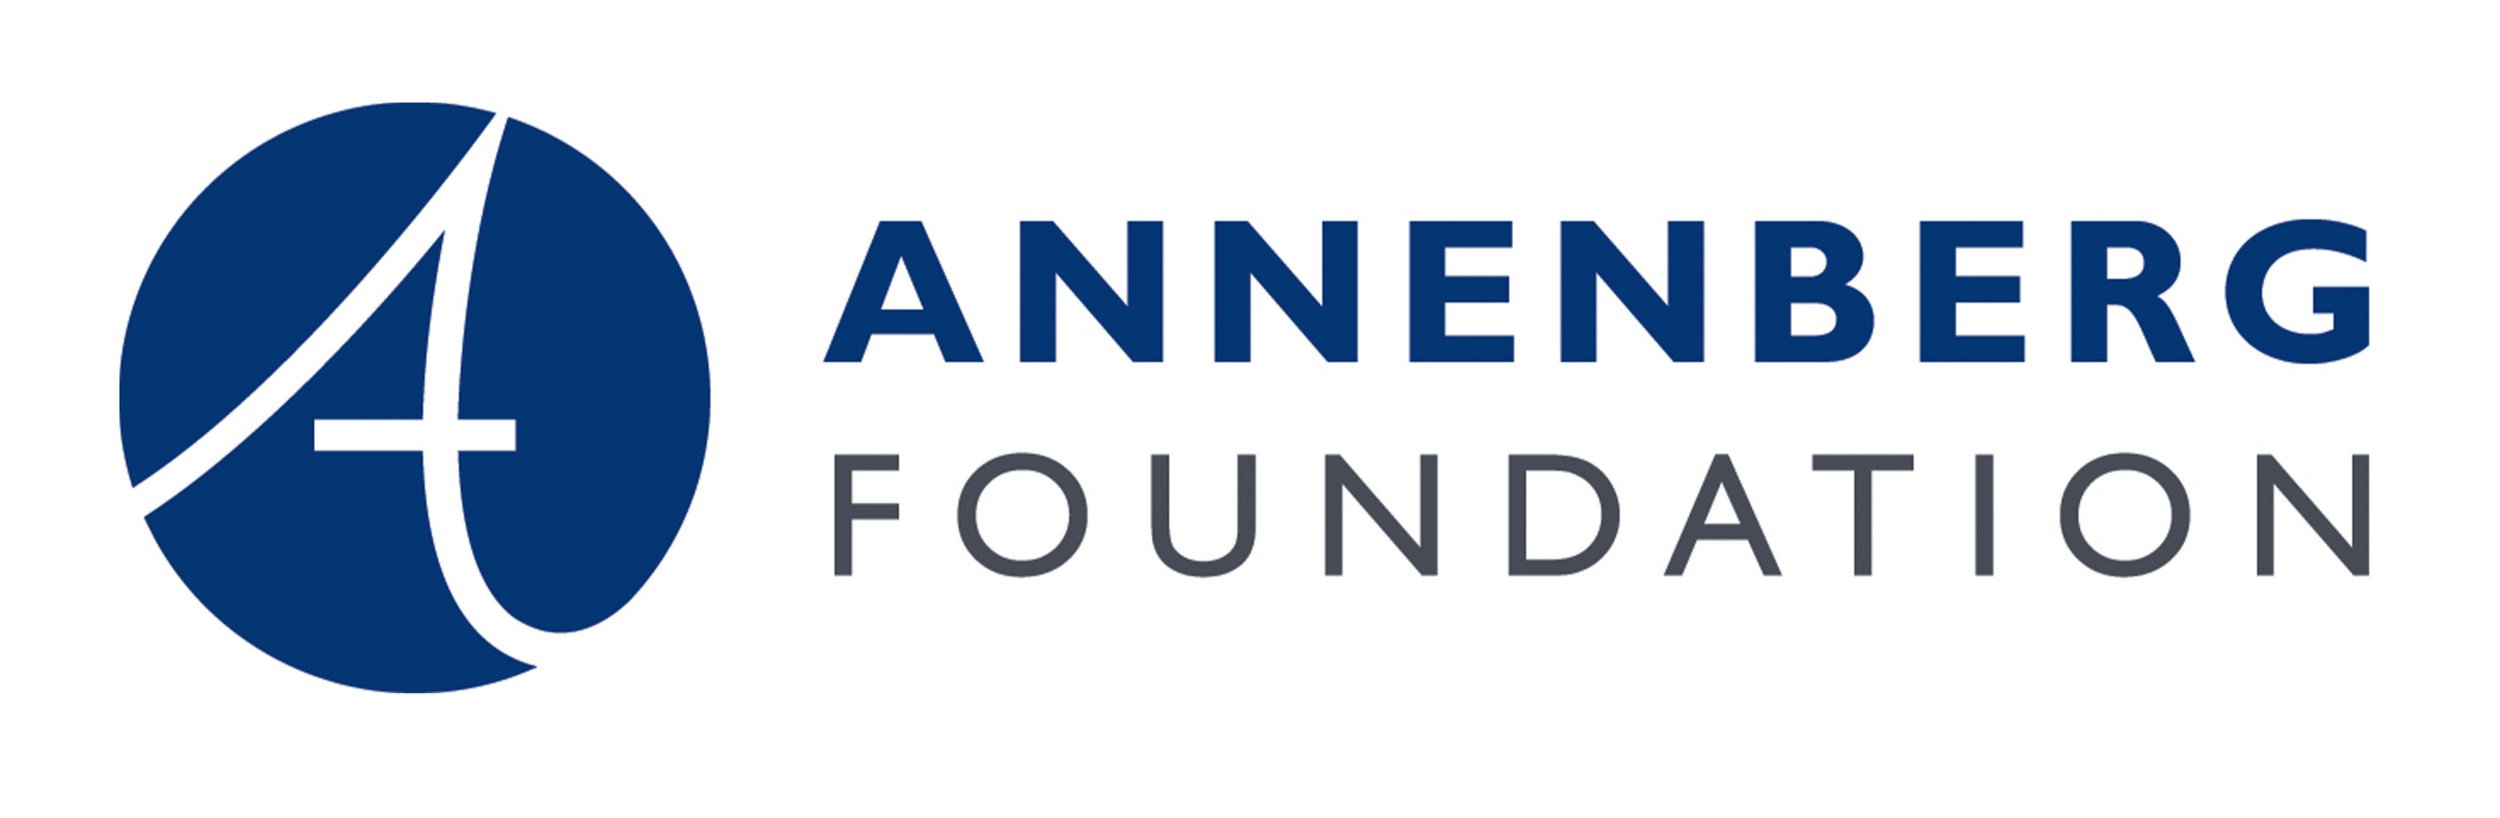 Annenberg_Foundation_Logo.jpg